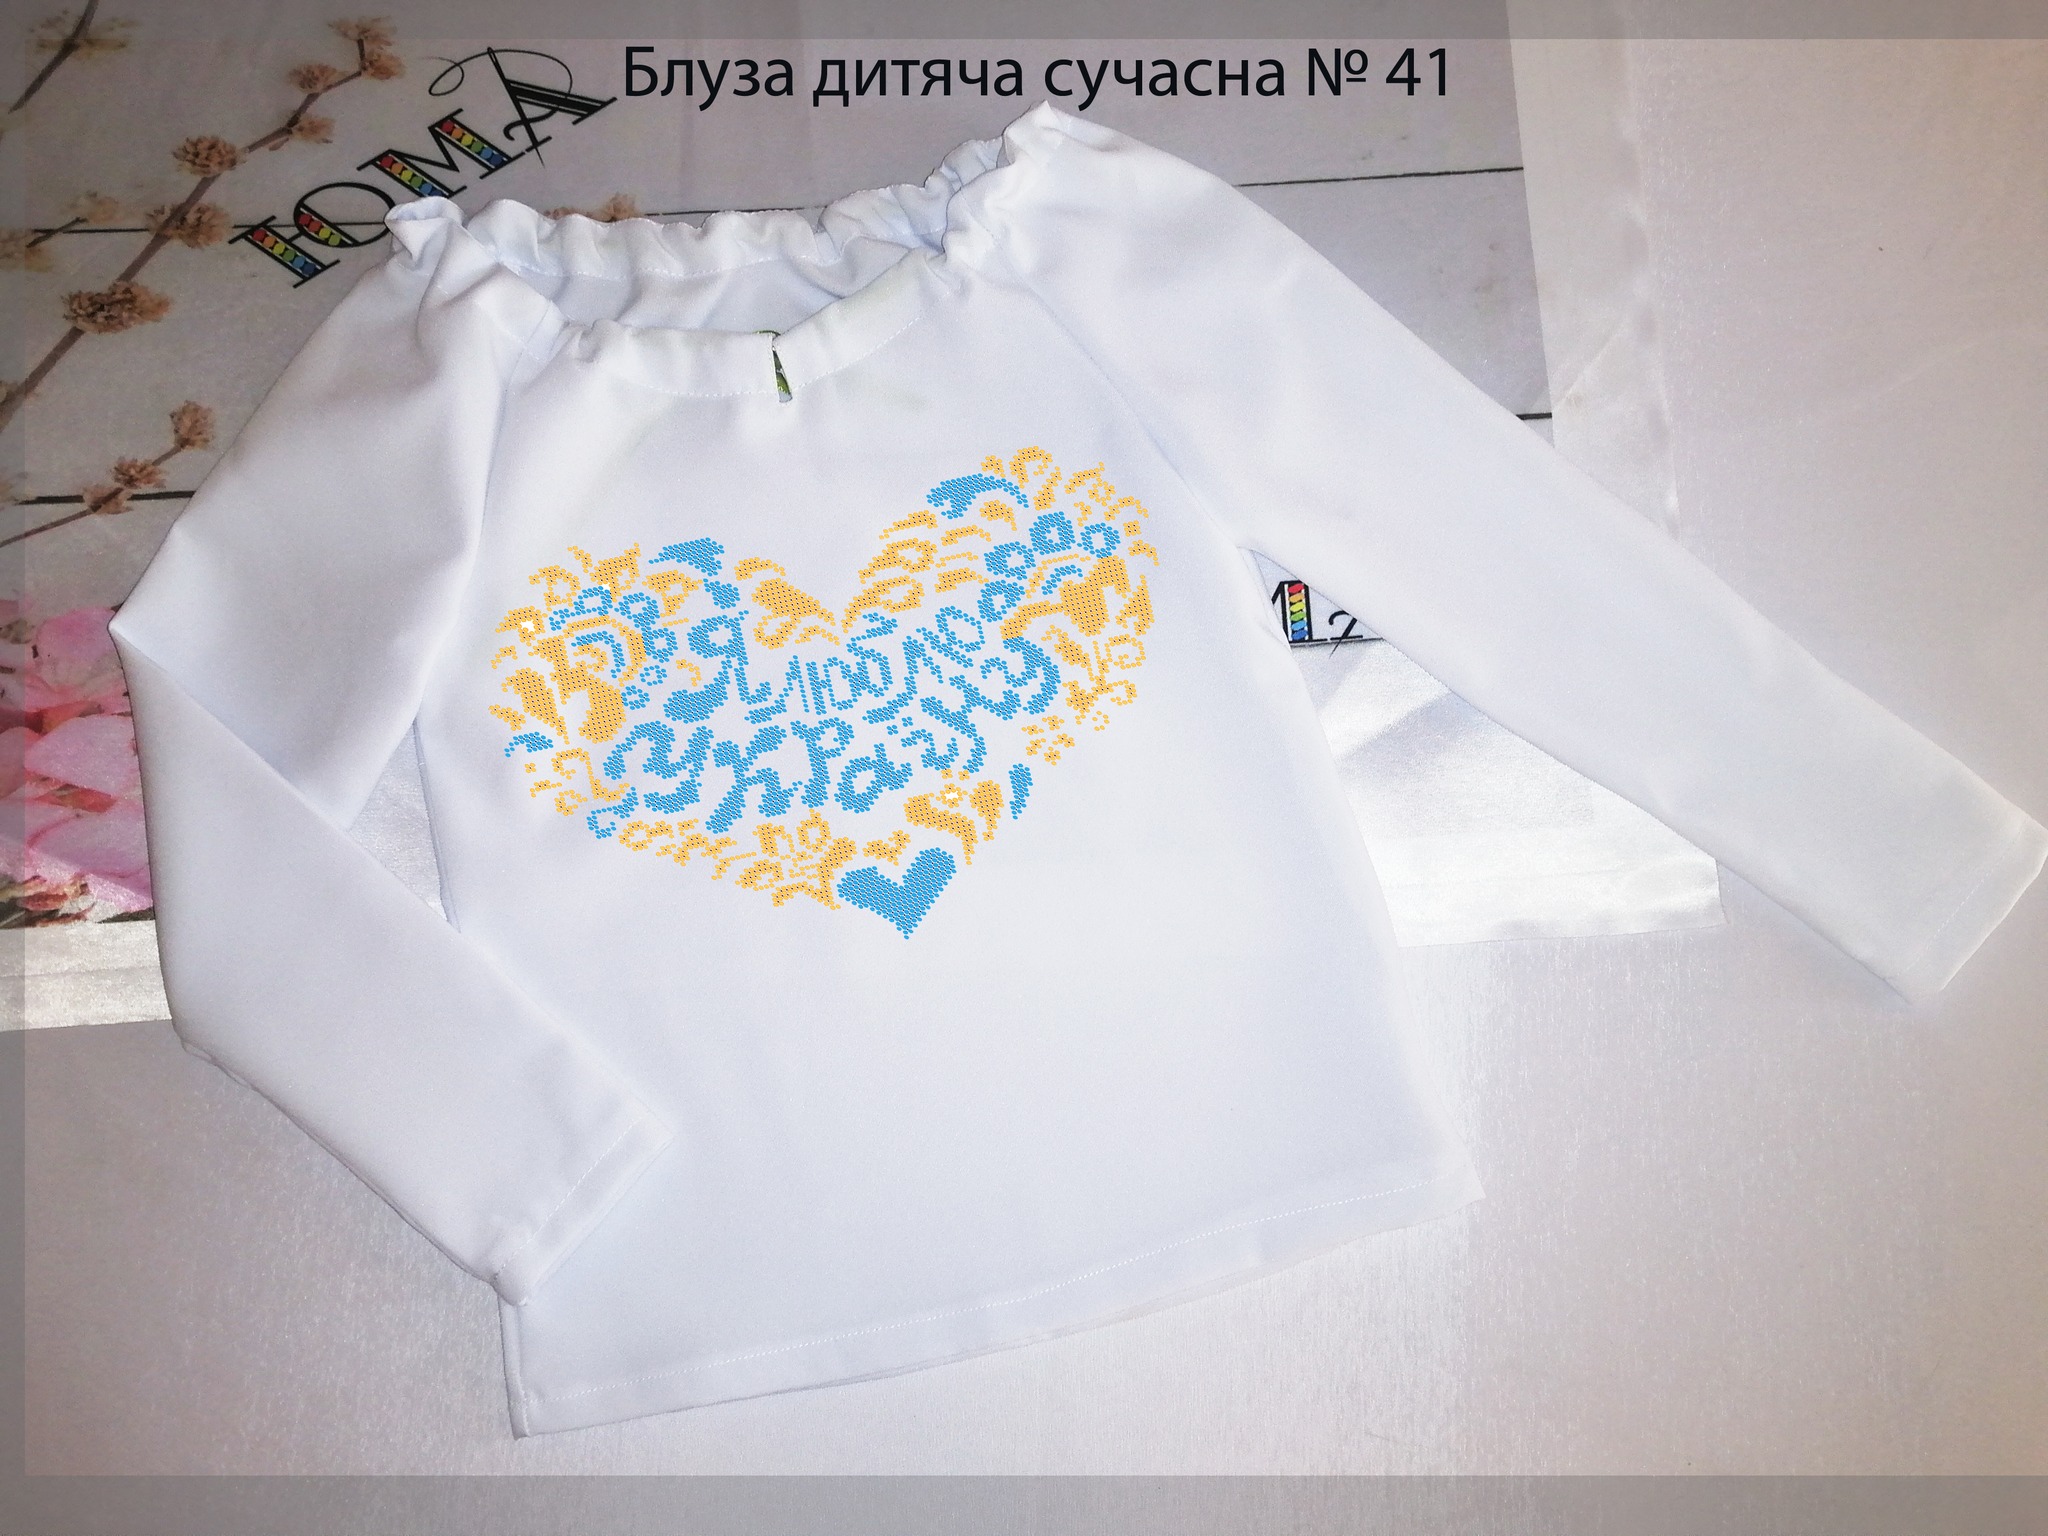 Пошита дитяча блузка для вишивки Сучасна БДС-41